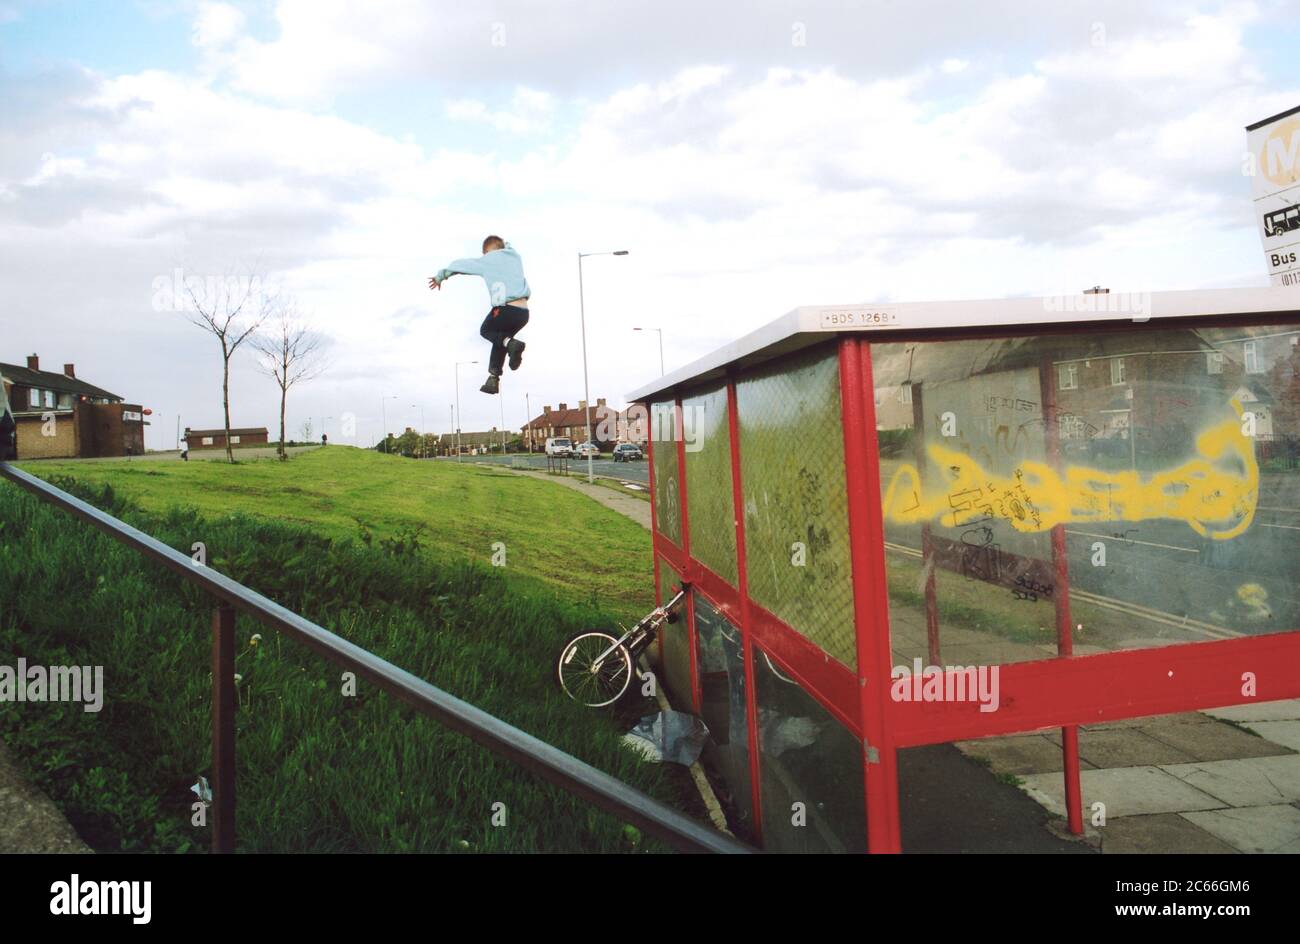 Boy jumping off bus shelter; Bradford council estate; UK Stock Photo